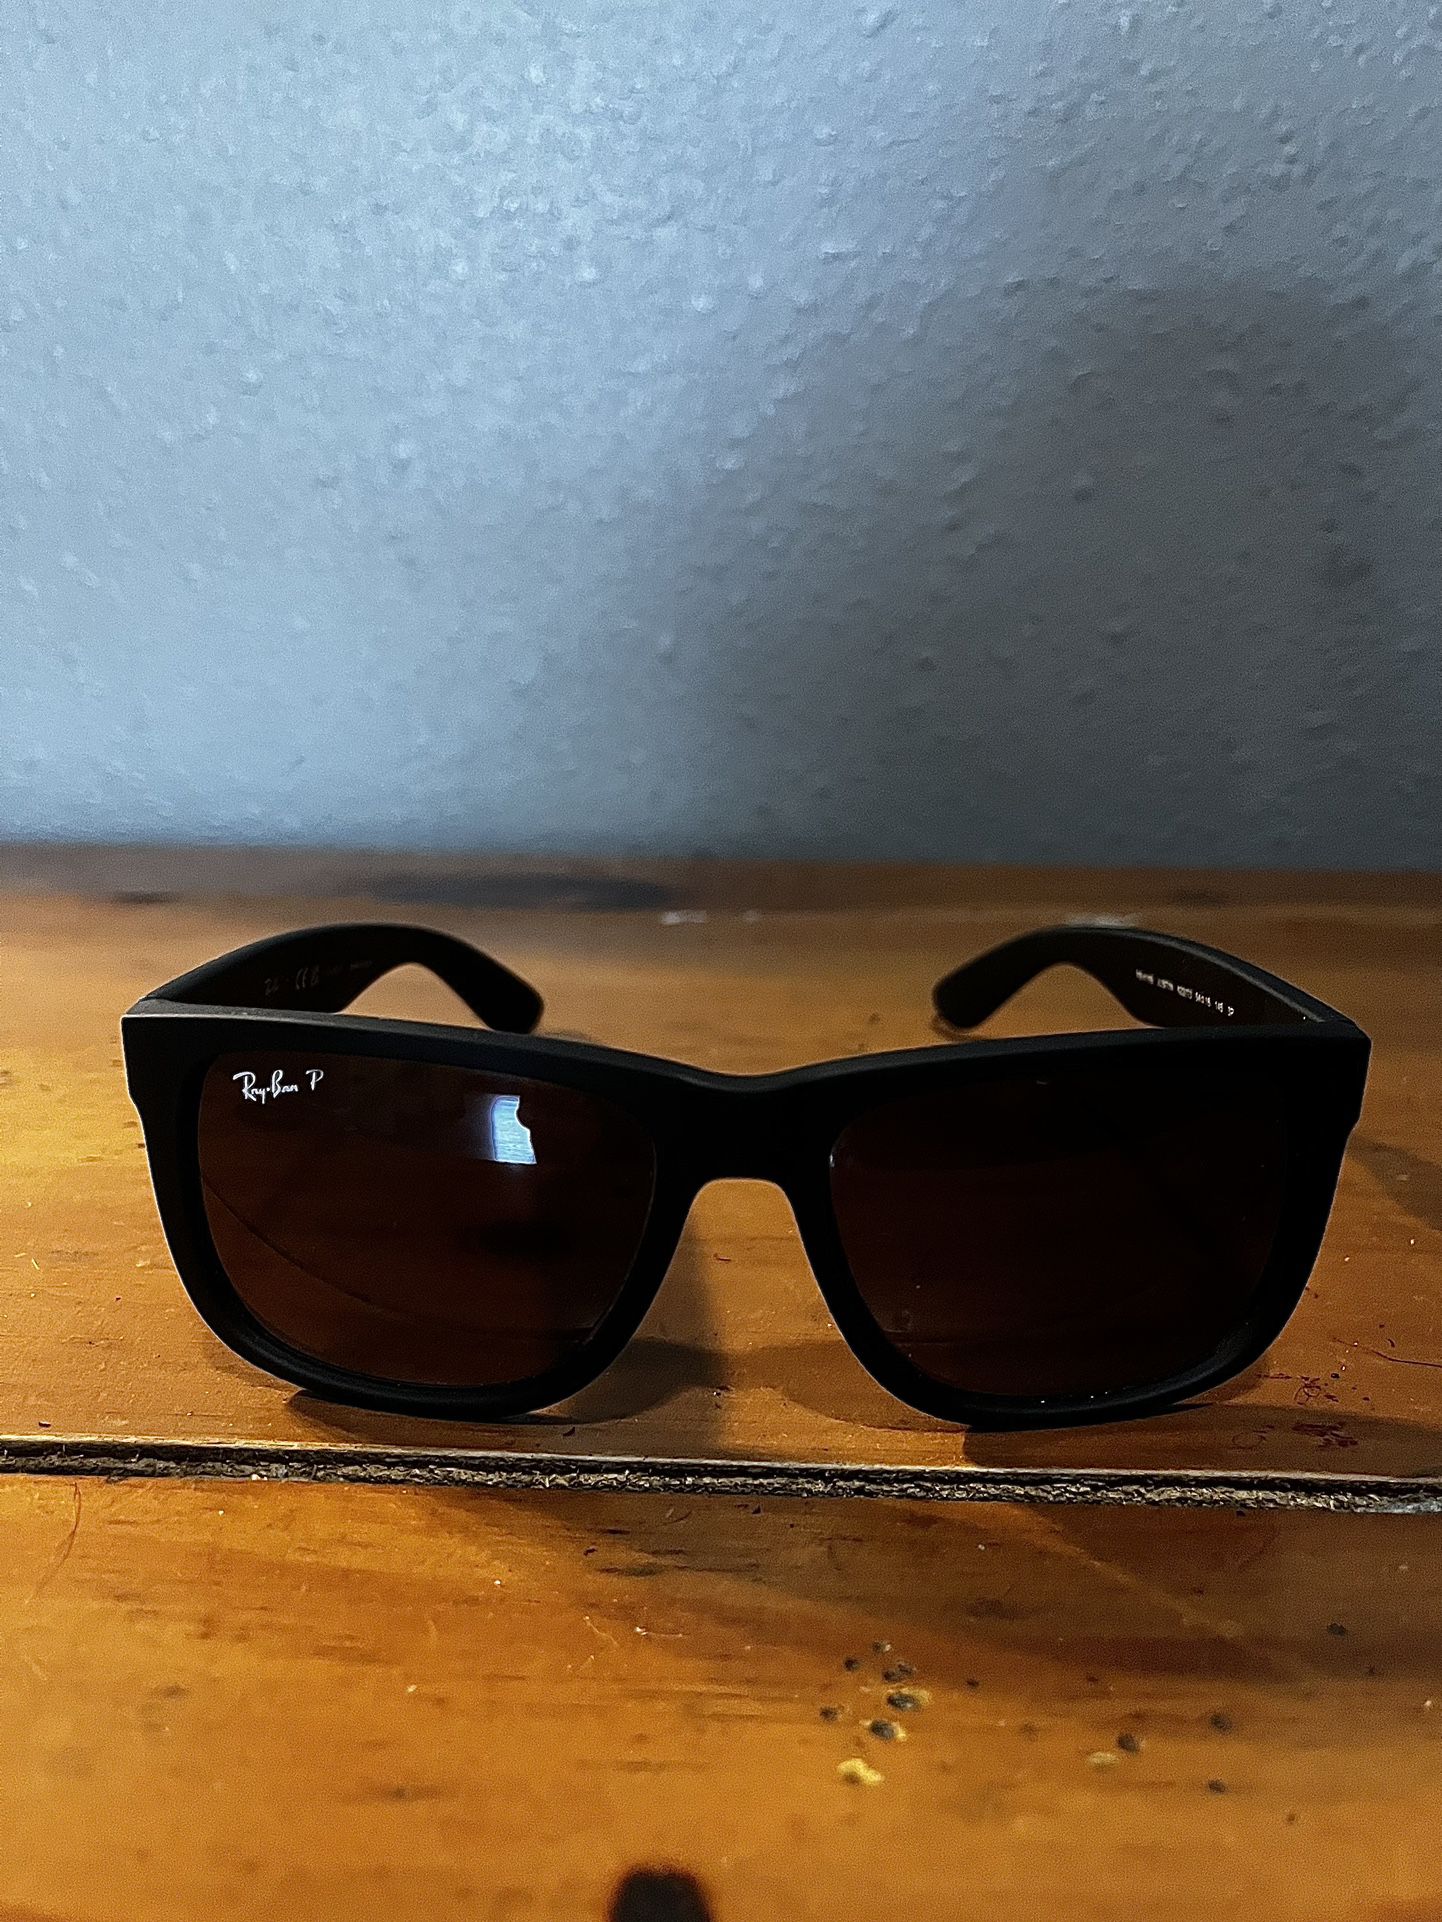 Rayban sunglasses !!!! $50 